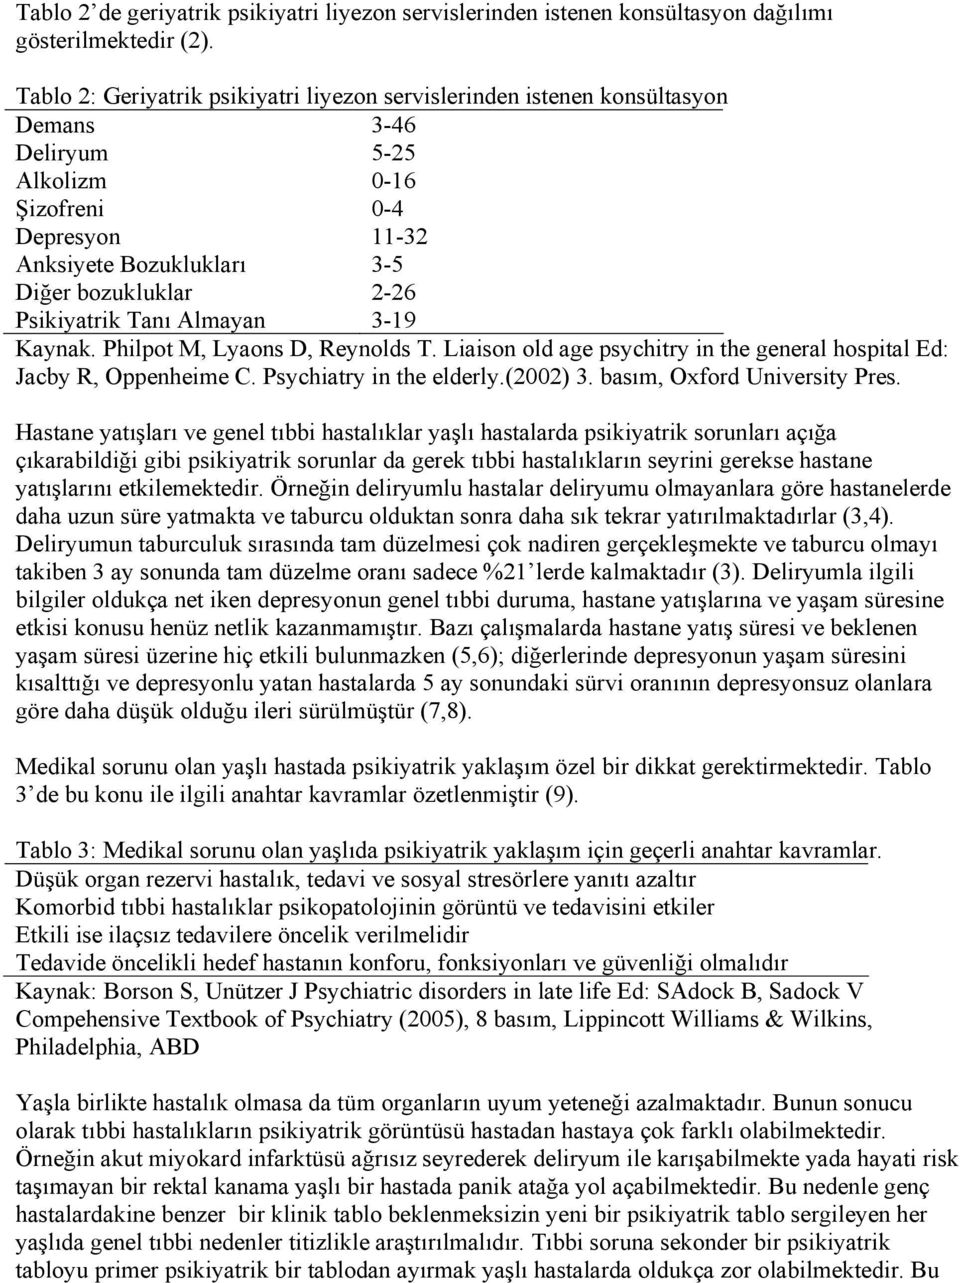 Psikiyatrik Tanı Almayan 3-19 Kaynak. Philpot M, Lyaons D, Reynolds T. Liaison old age psychitry in the general hospital Ed: Jacby R, Oppenheime C. Psychiatry in the elderly.(2002) 3.